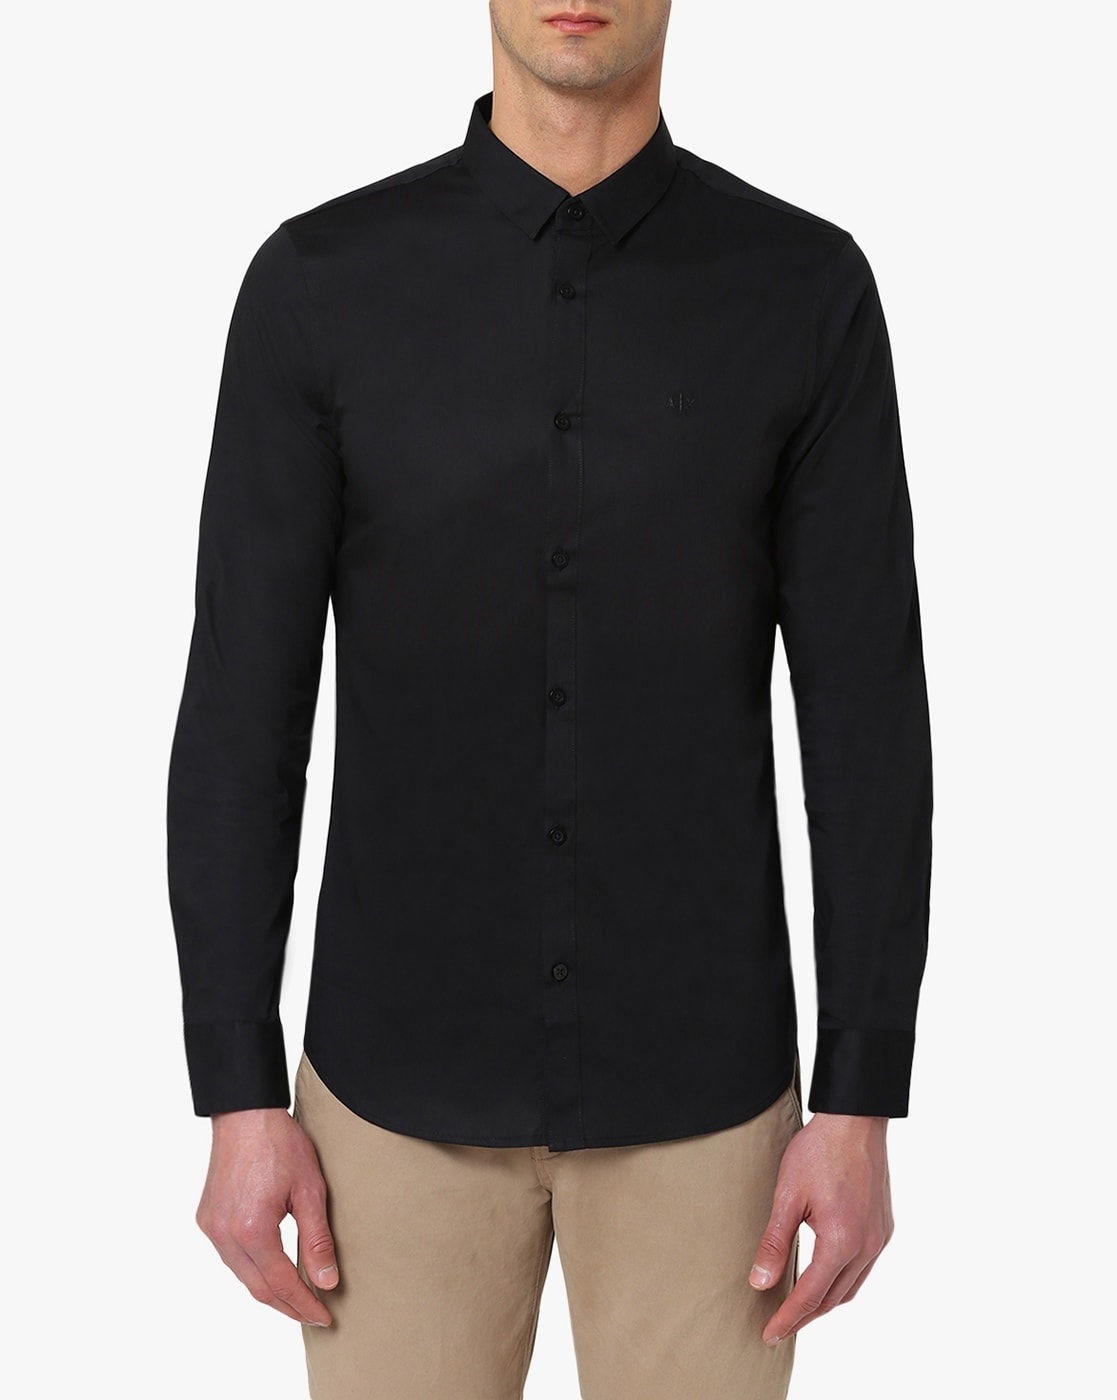 armani black shirt